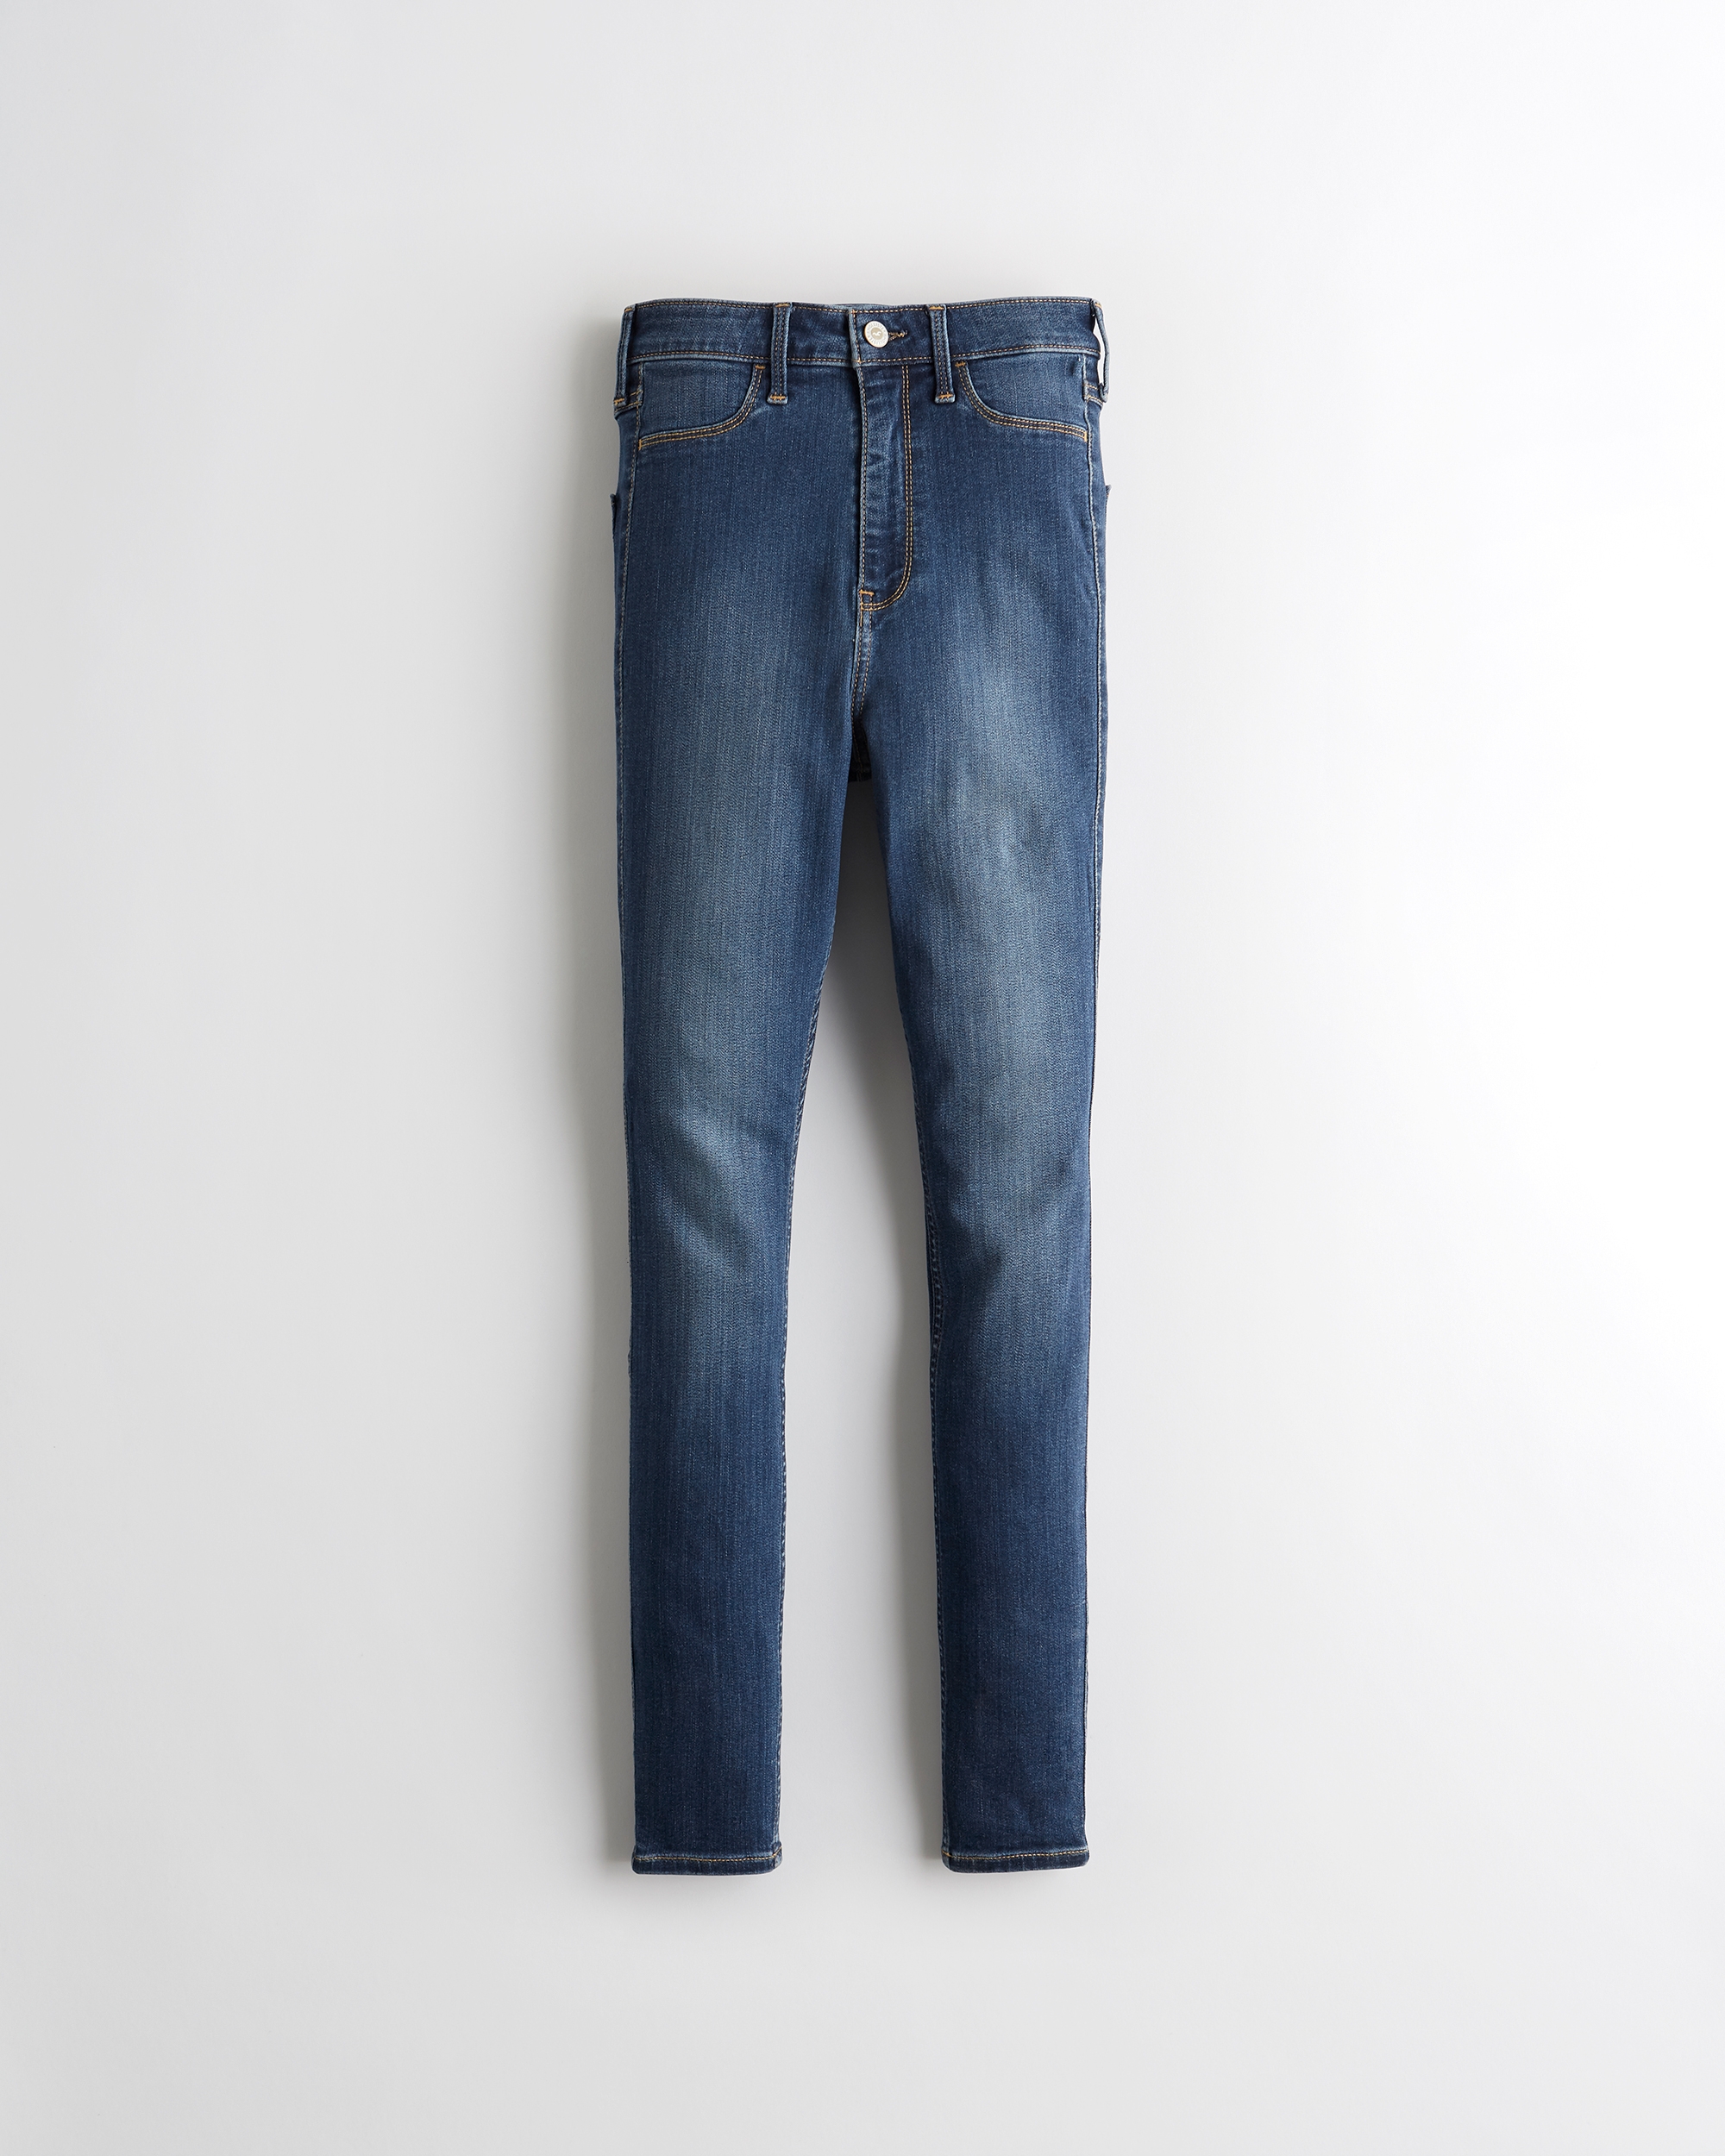 buy hollister jeans online